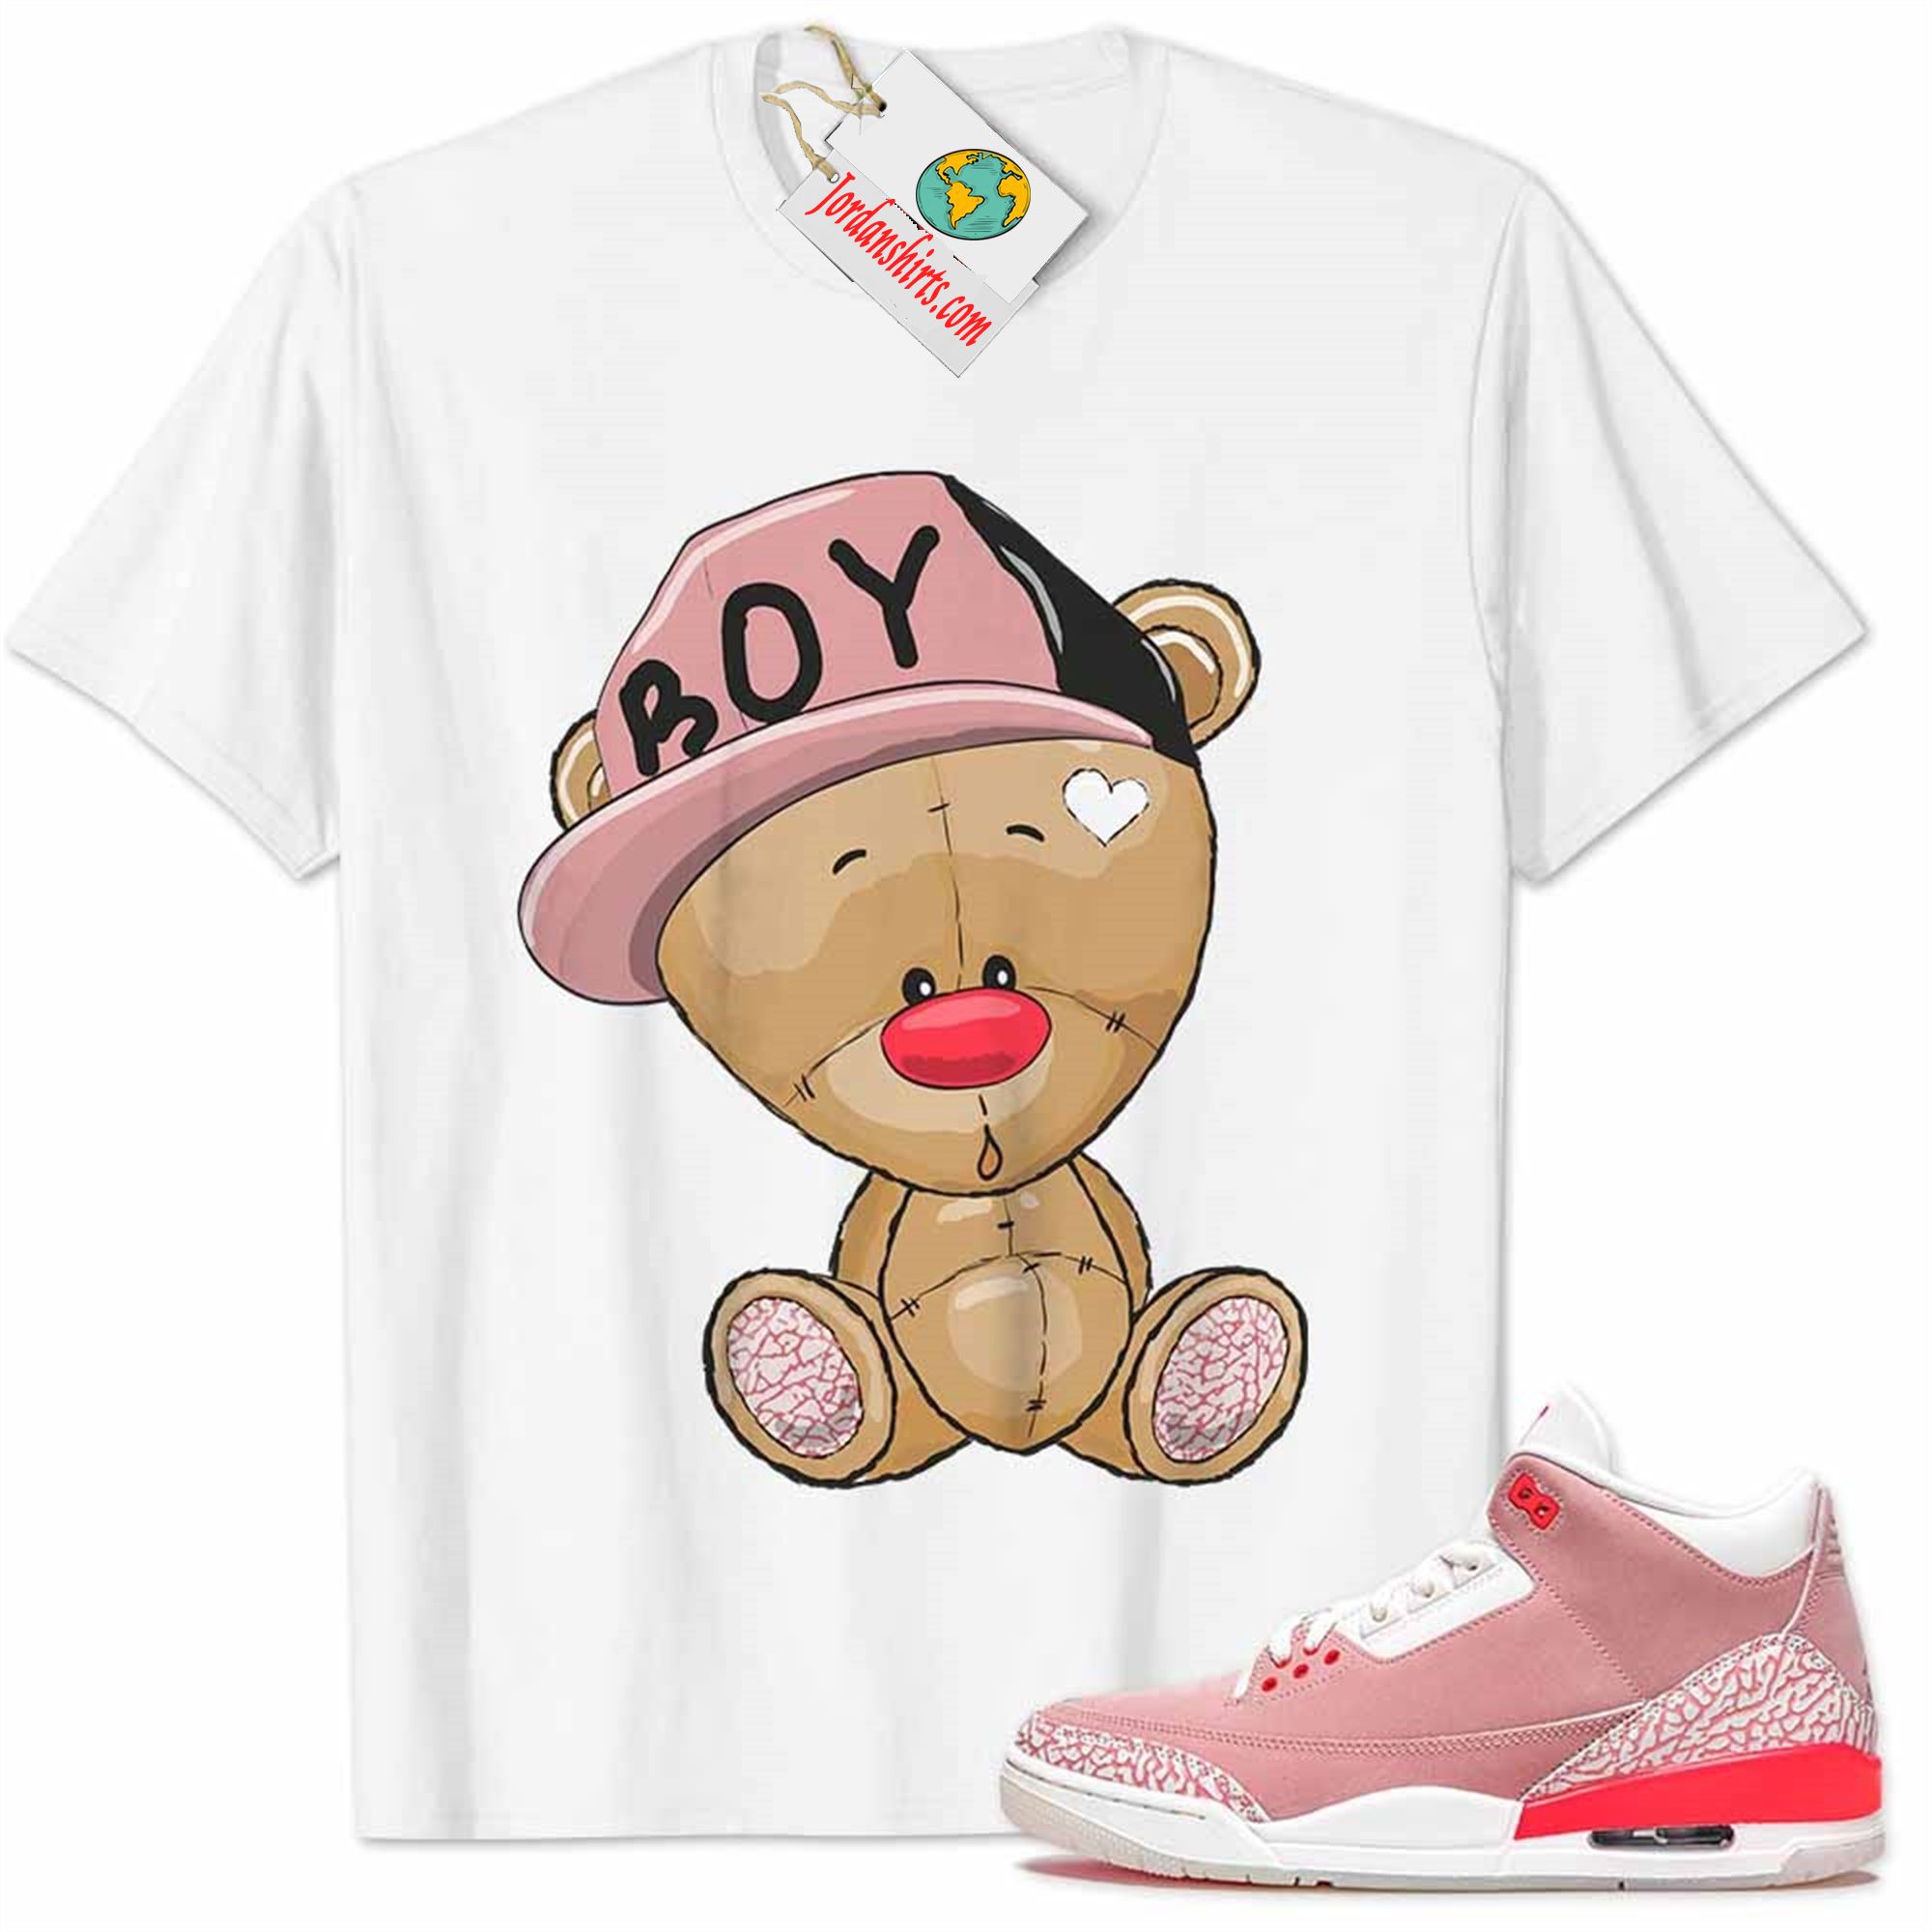 Jordan 3 Shirt, Jordan 3 Rust Pink Shirt Cute Baby Teddy Bear White Full Size Up To 5xl